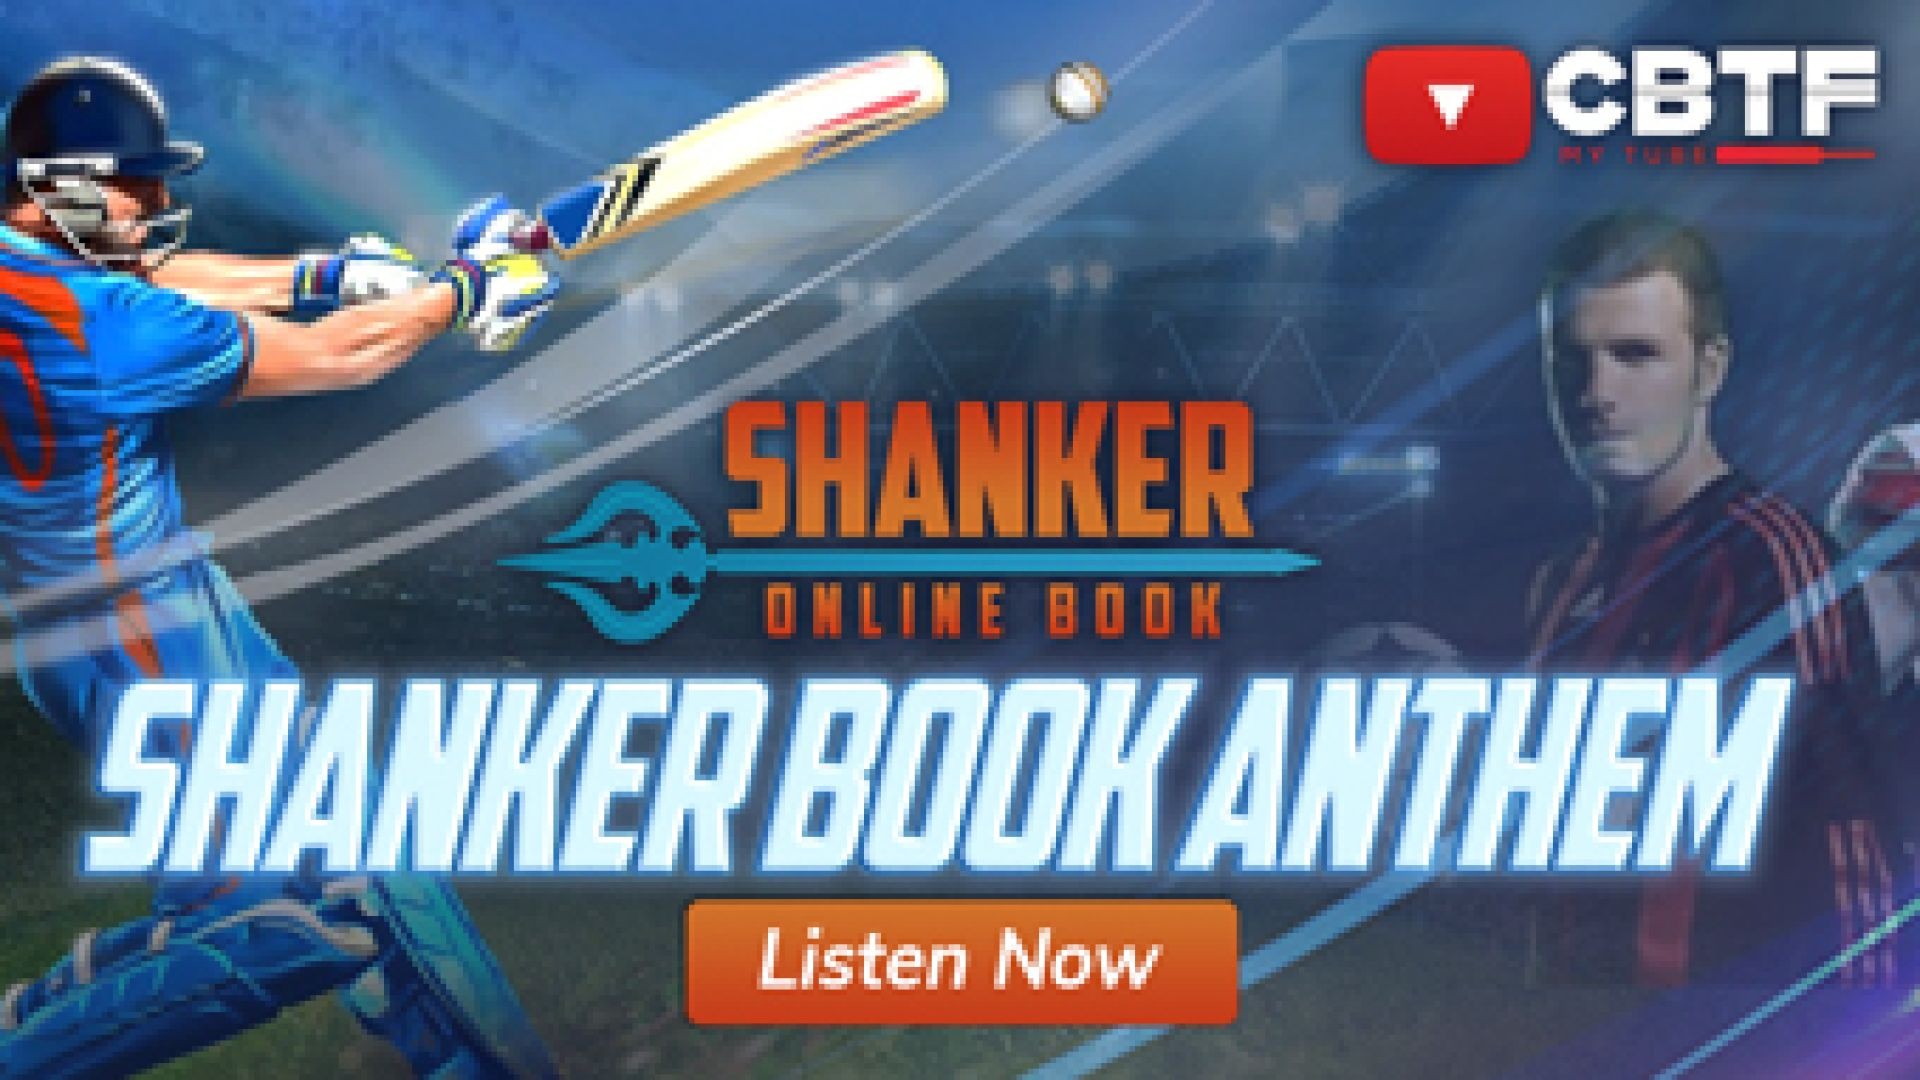 ⁣Shanker Anthem - Powered by CBTF